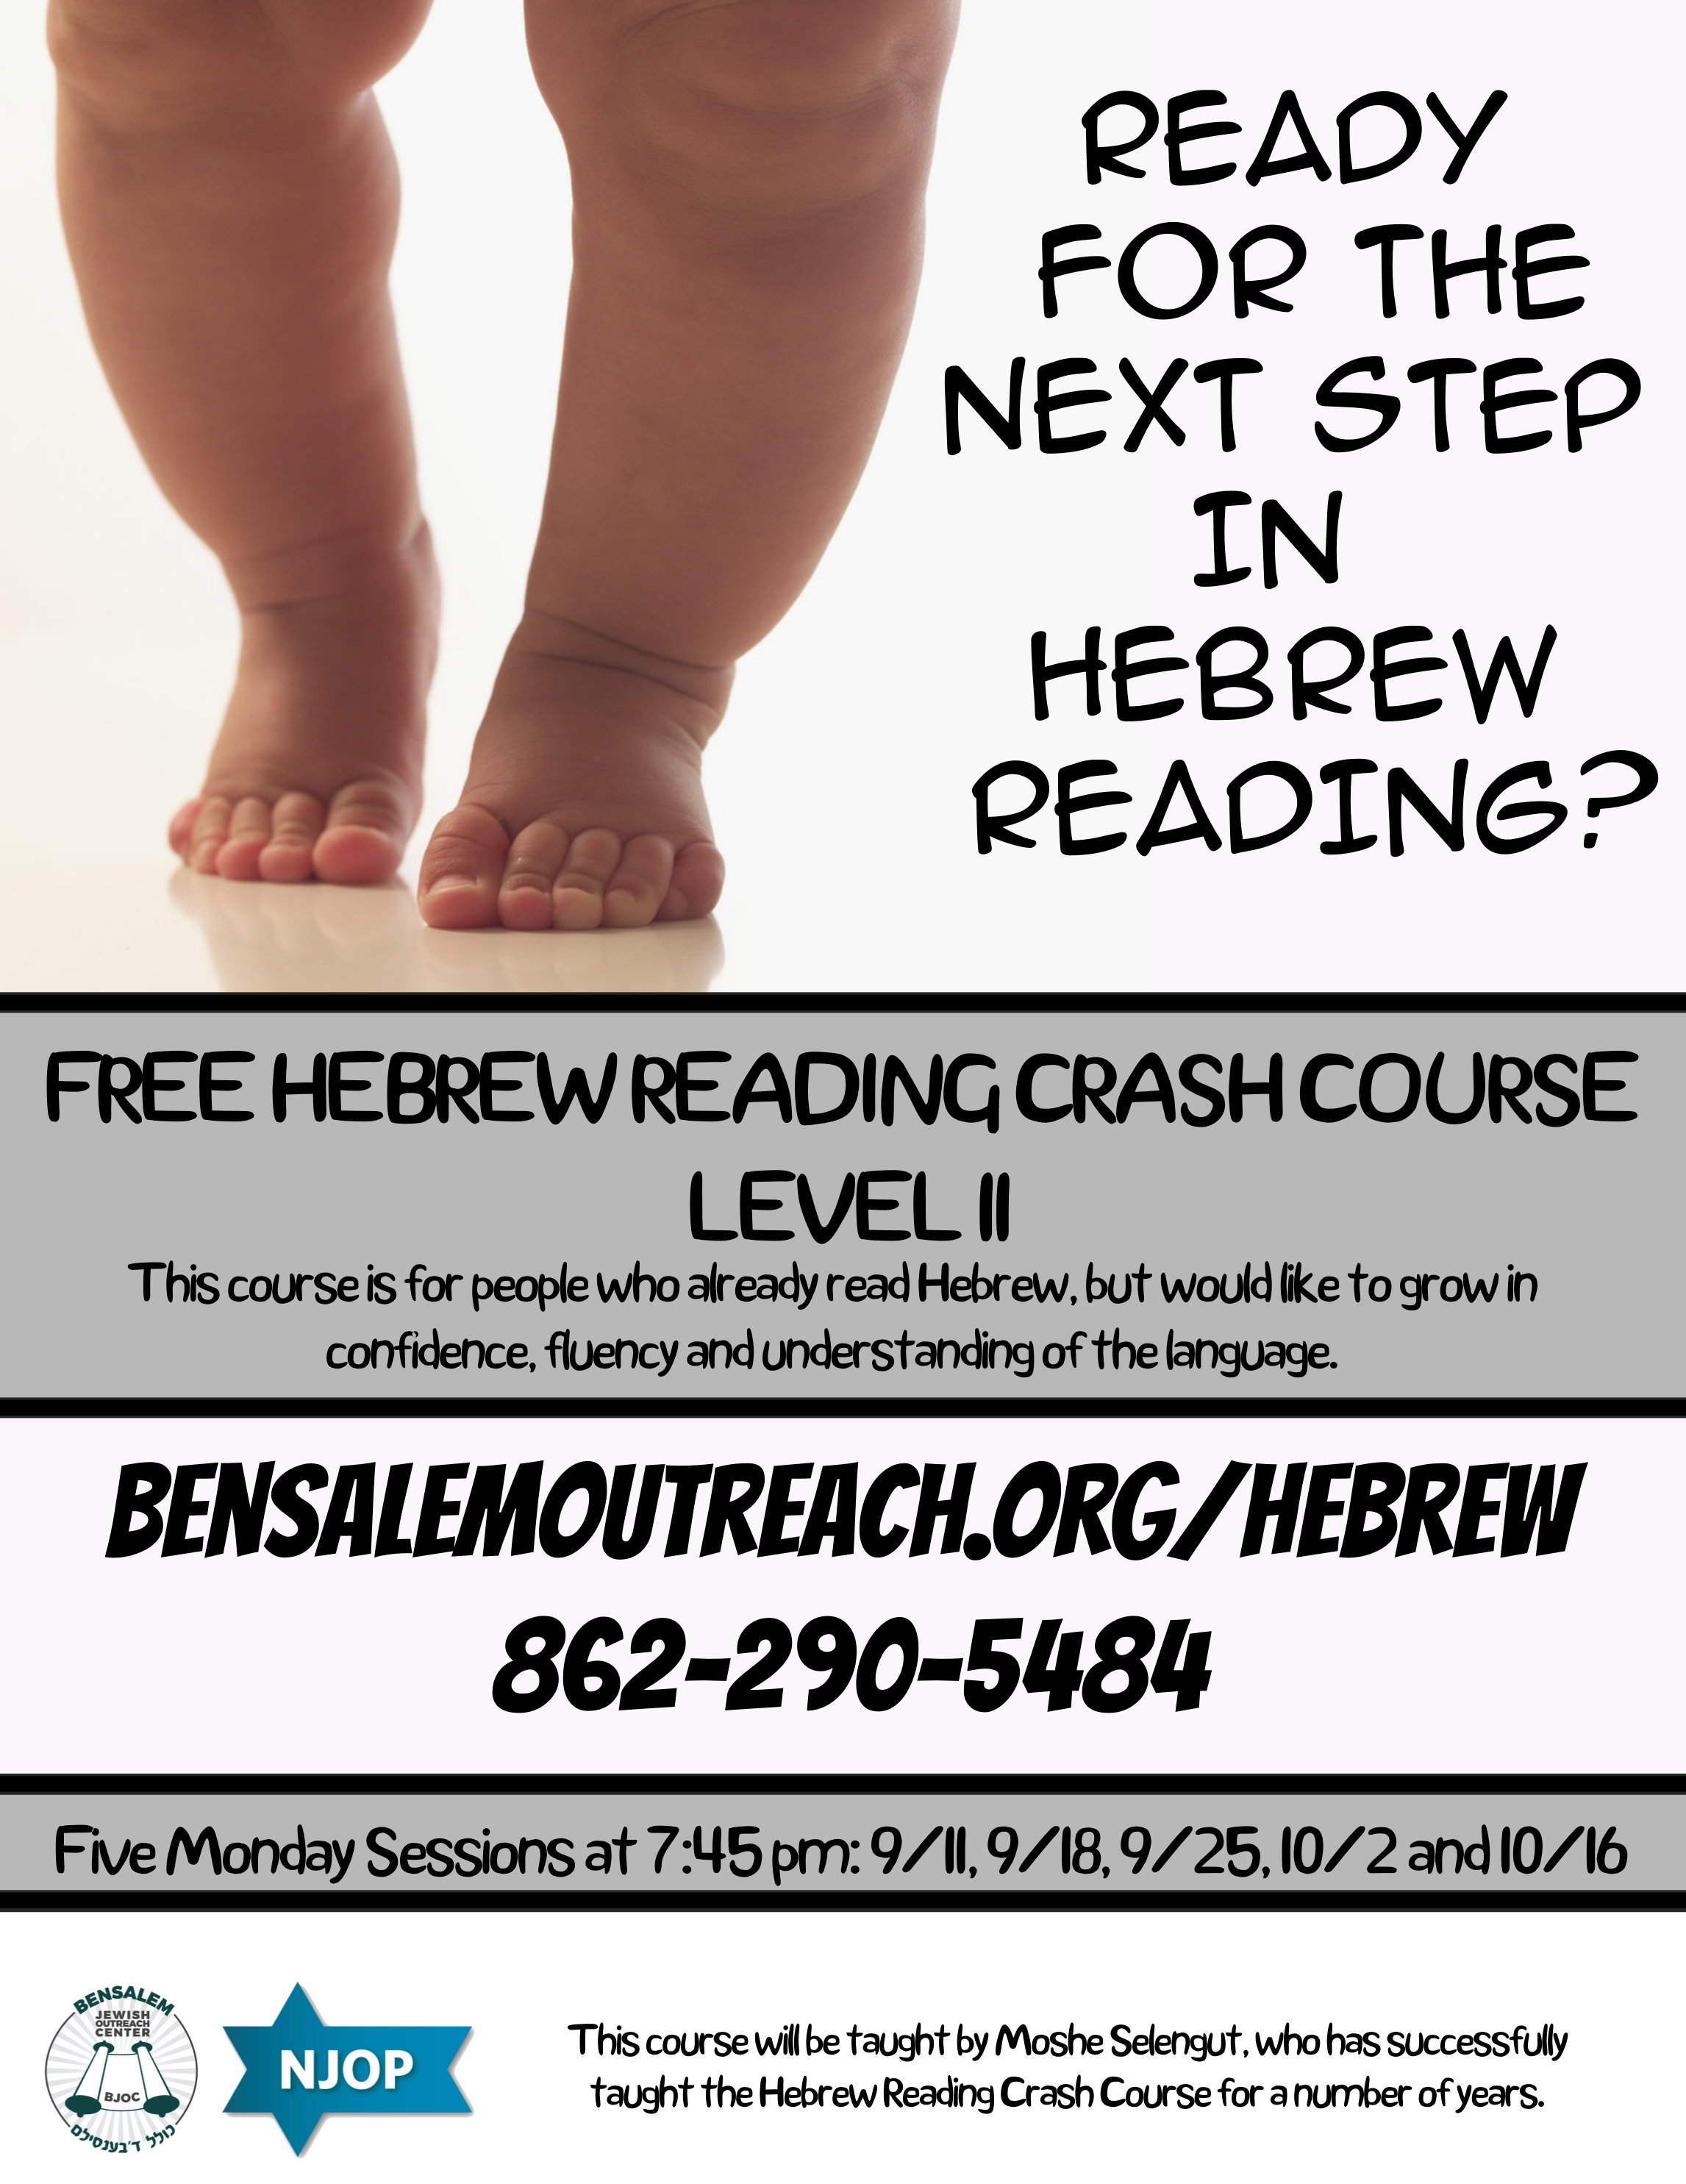 Crash Course in Hebrew Reading Level II